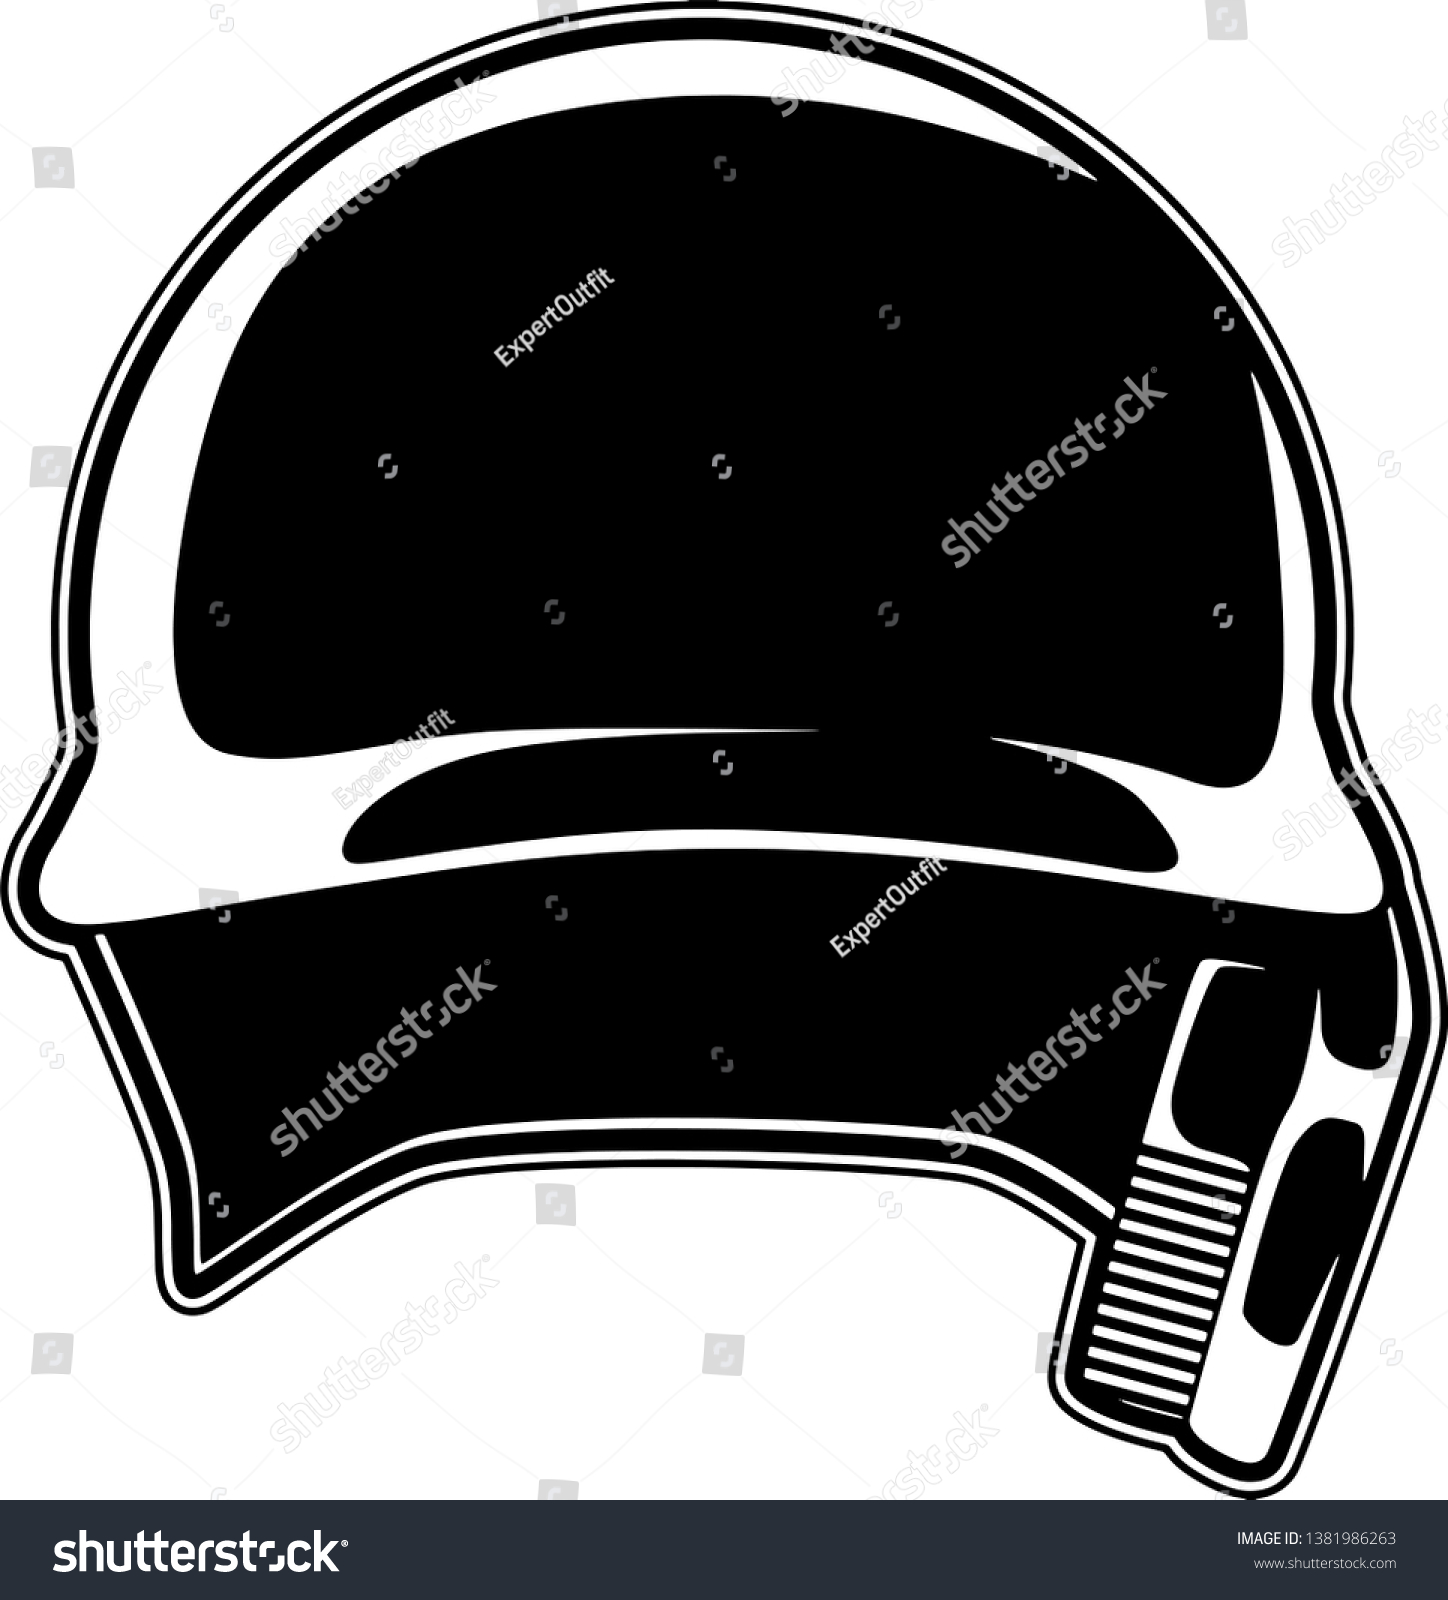 SVG of Baseball Players Batting Helmet Equipment For Uniform svg